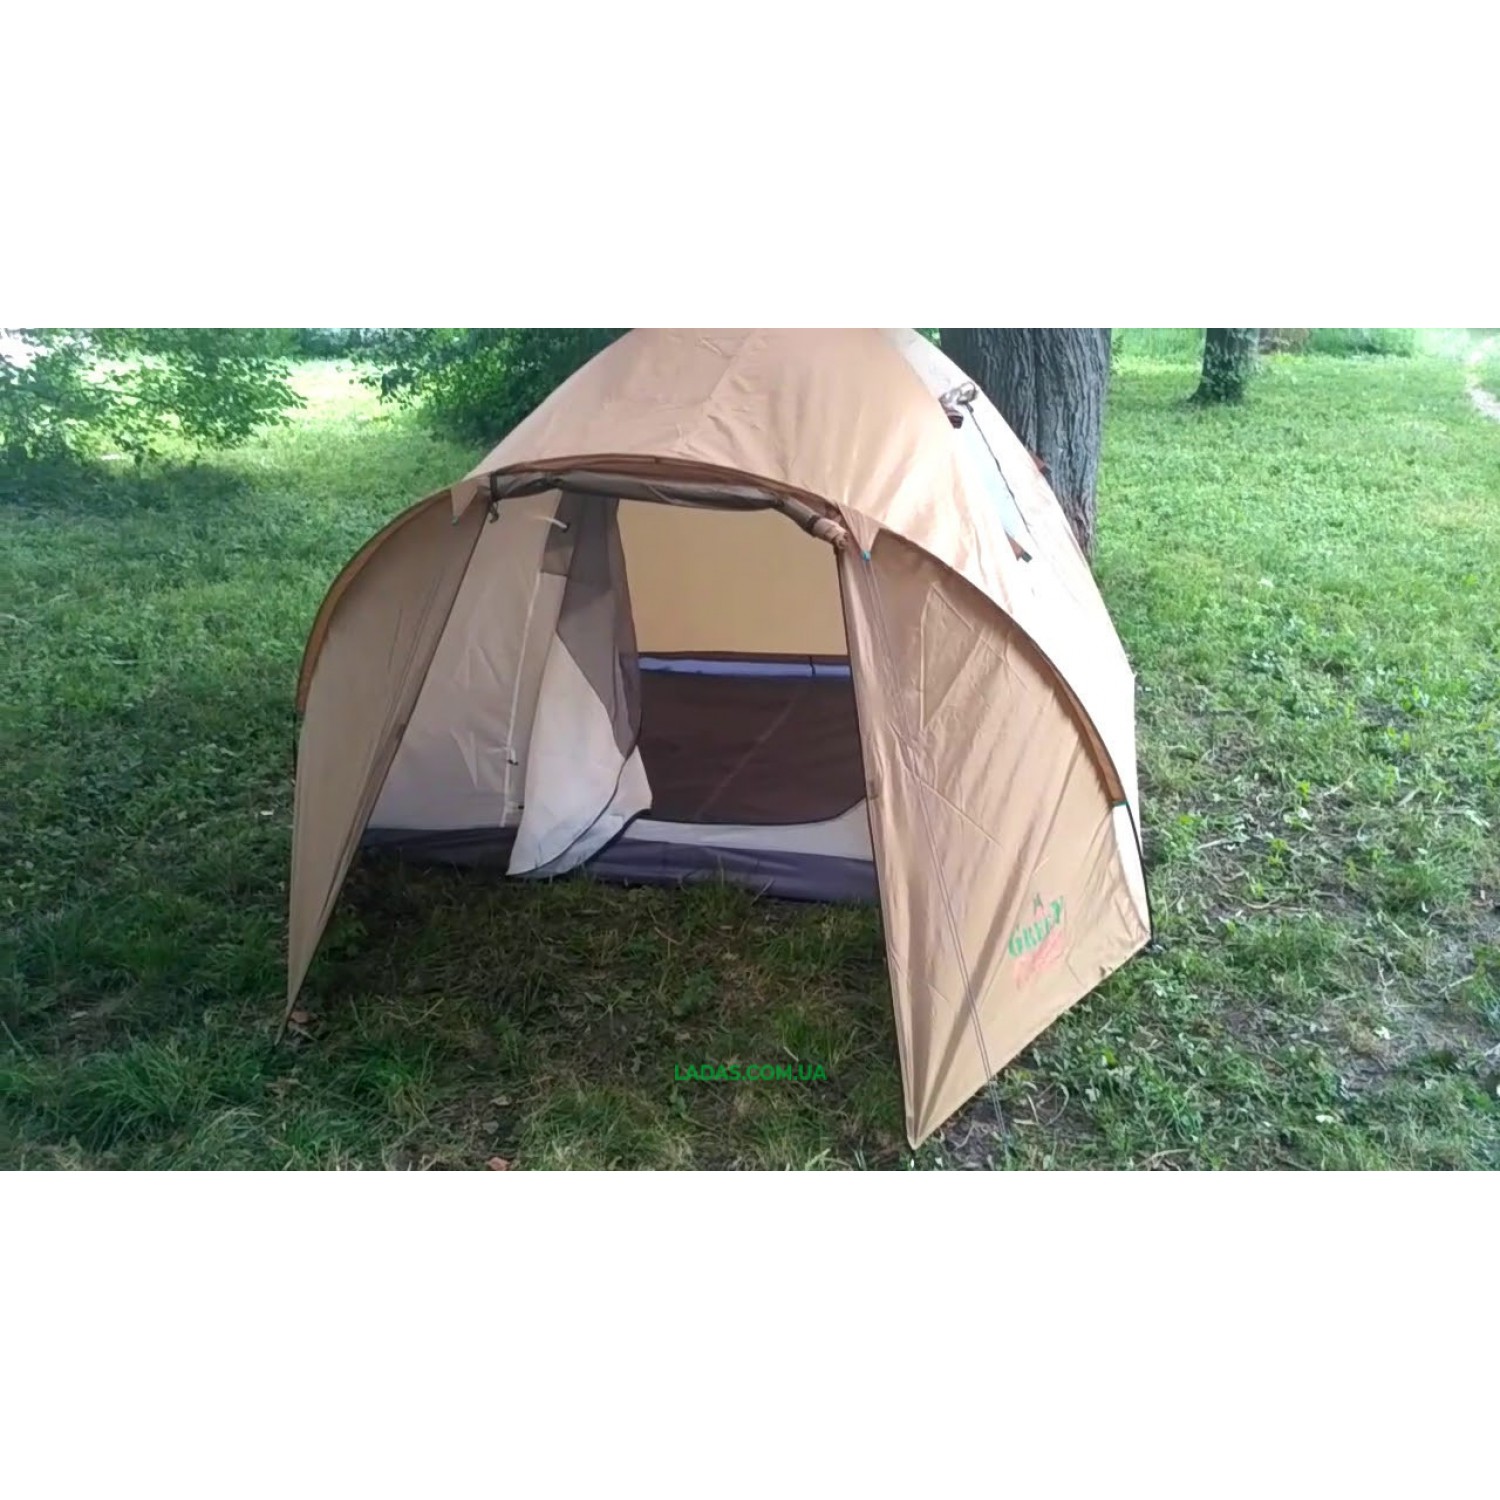 Палатка четырехместная Green Camp 1004